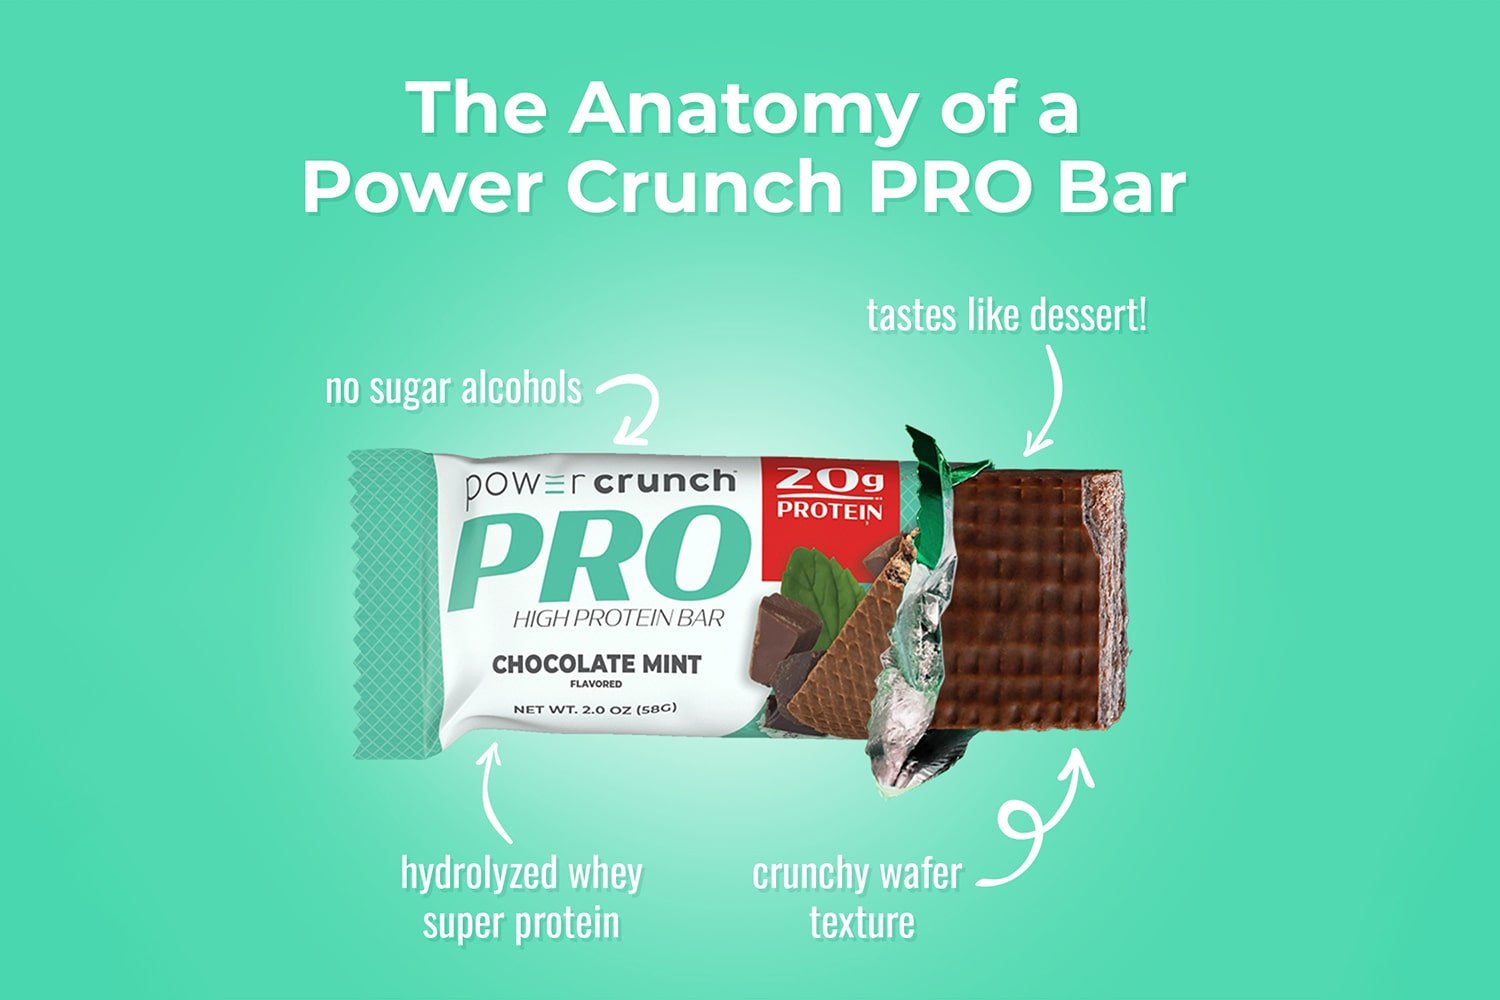 Anatomy of a Power Crunch PRO Chocolate Mint bar with hydrolyzed whey protein, crunchy wafers